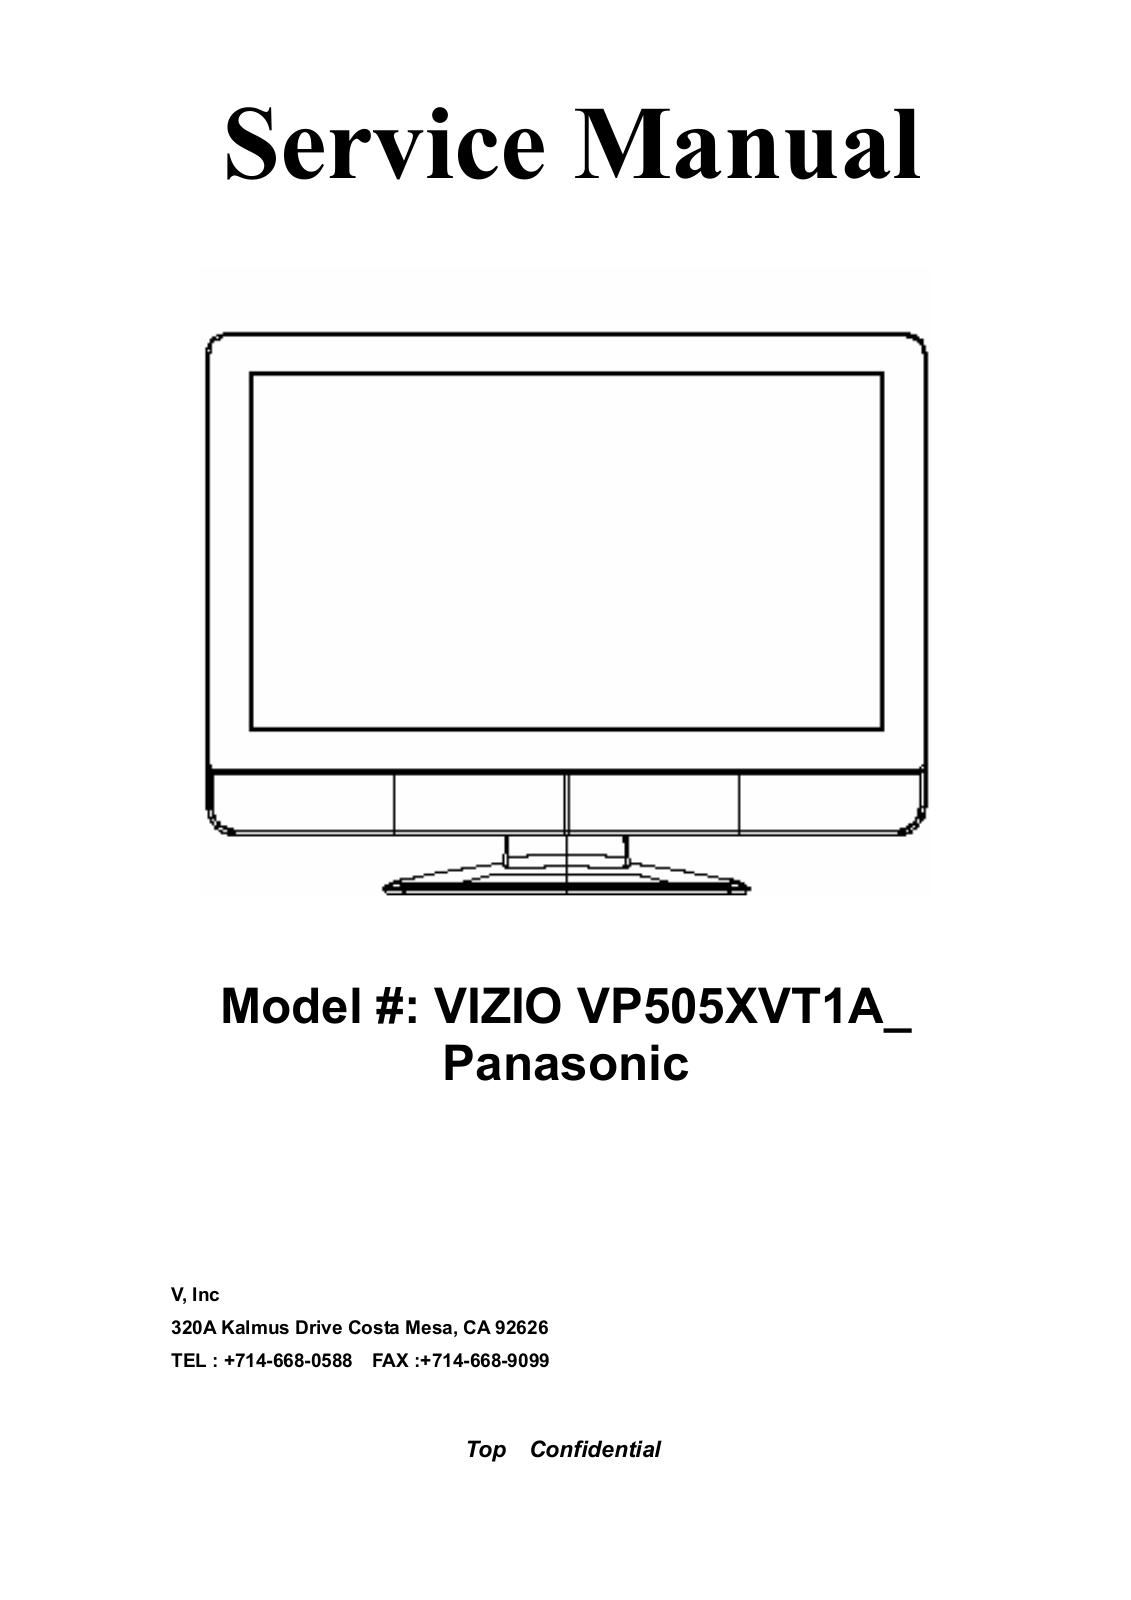 Vizio VP505XVT1A Service Manual